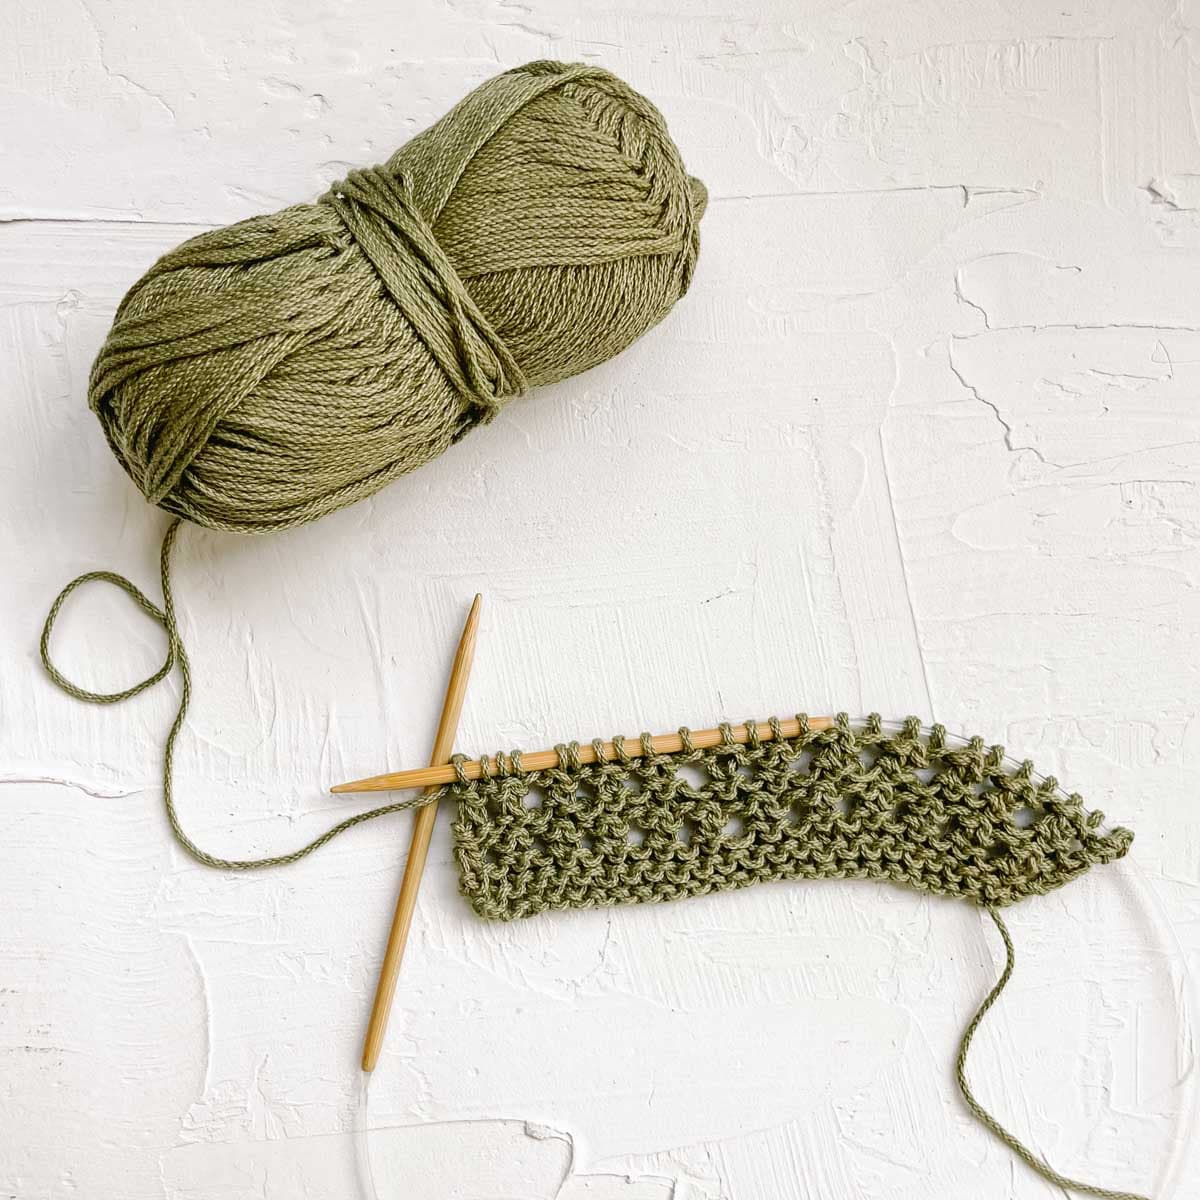 Circular knitting needles with flat square of green yarn and knitting.